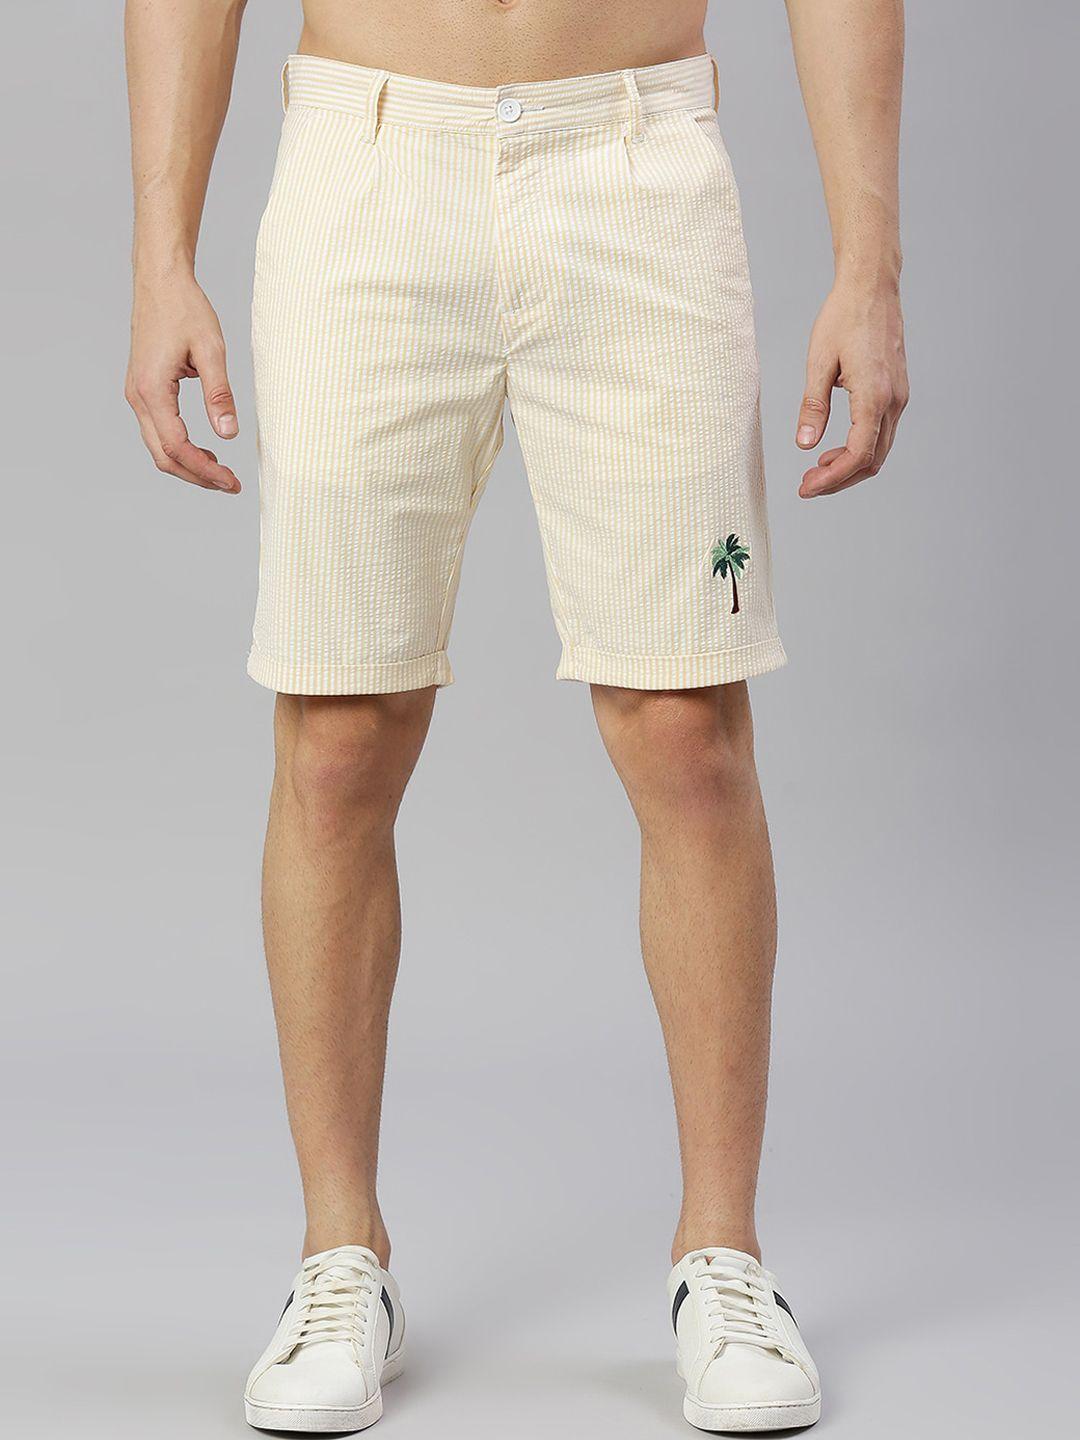 thomas-scott-men-mid-rise-slim-fit-shorts